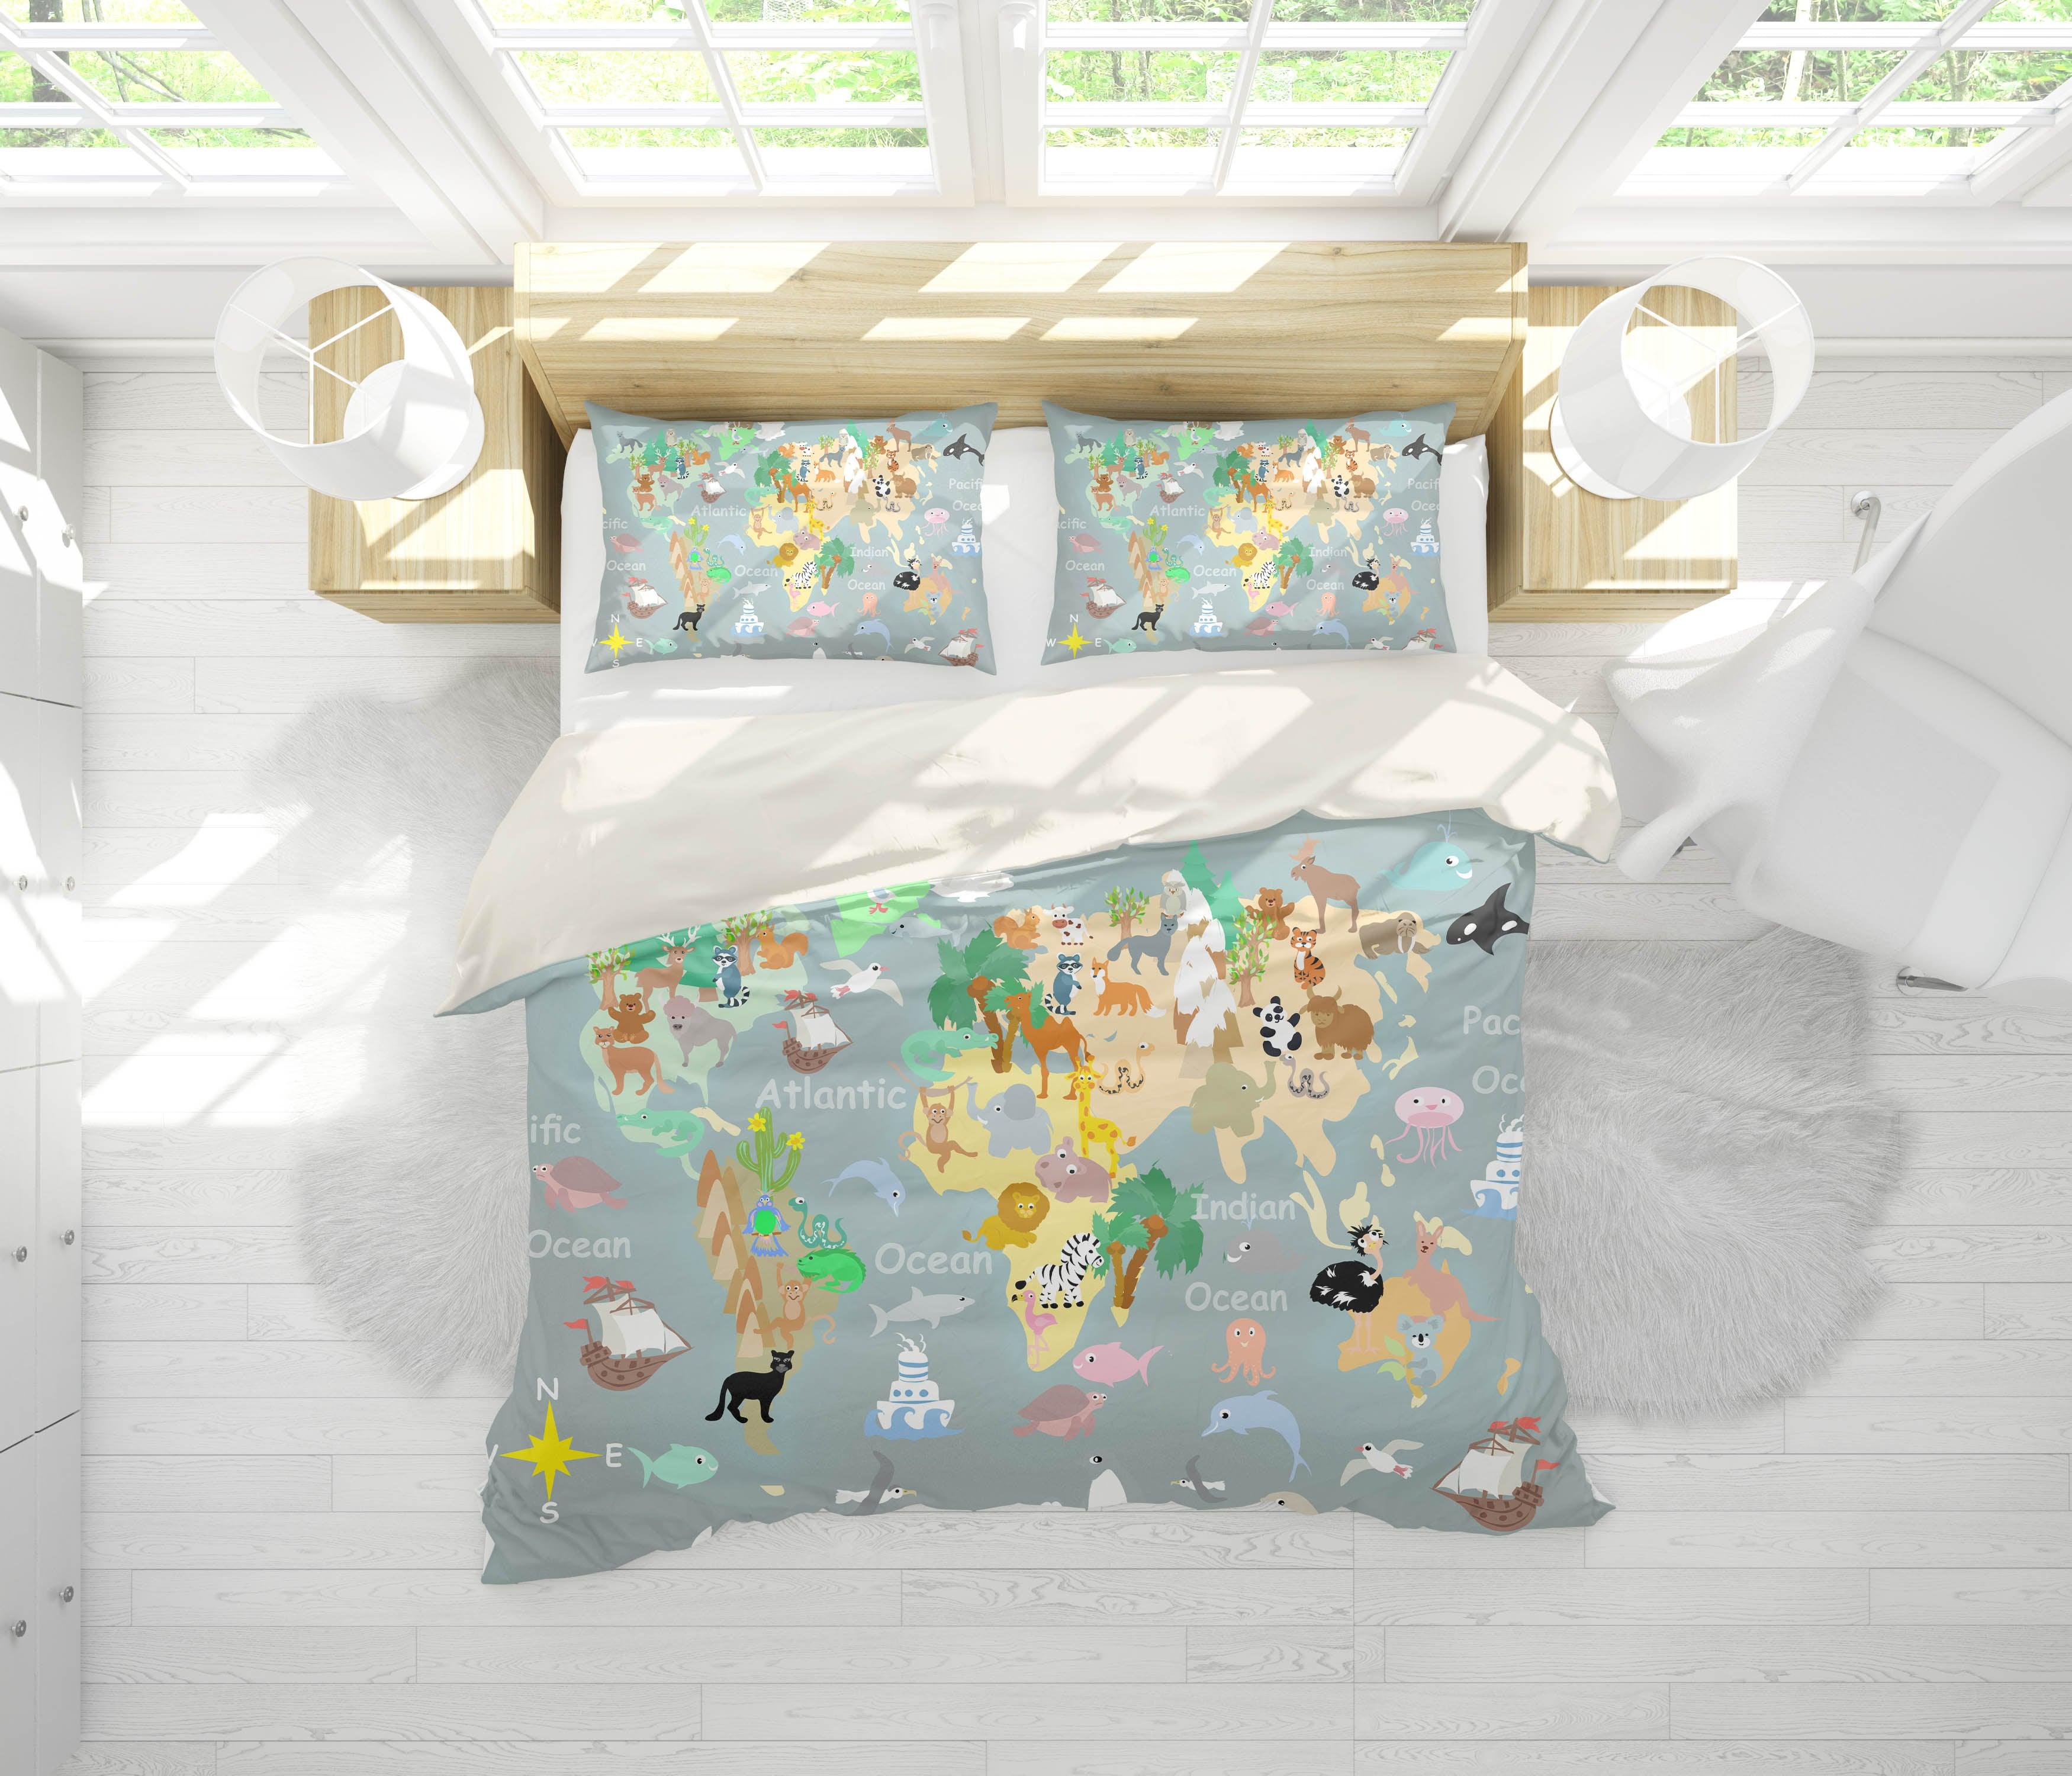 3D Grey World Map Quilt Cover Set Bedding Set Pillowcases 249- Jess Art Decoration